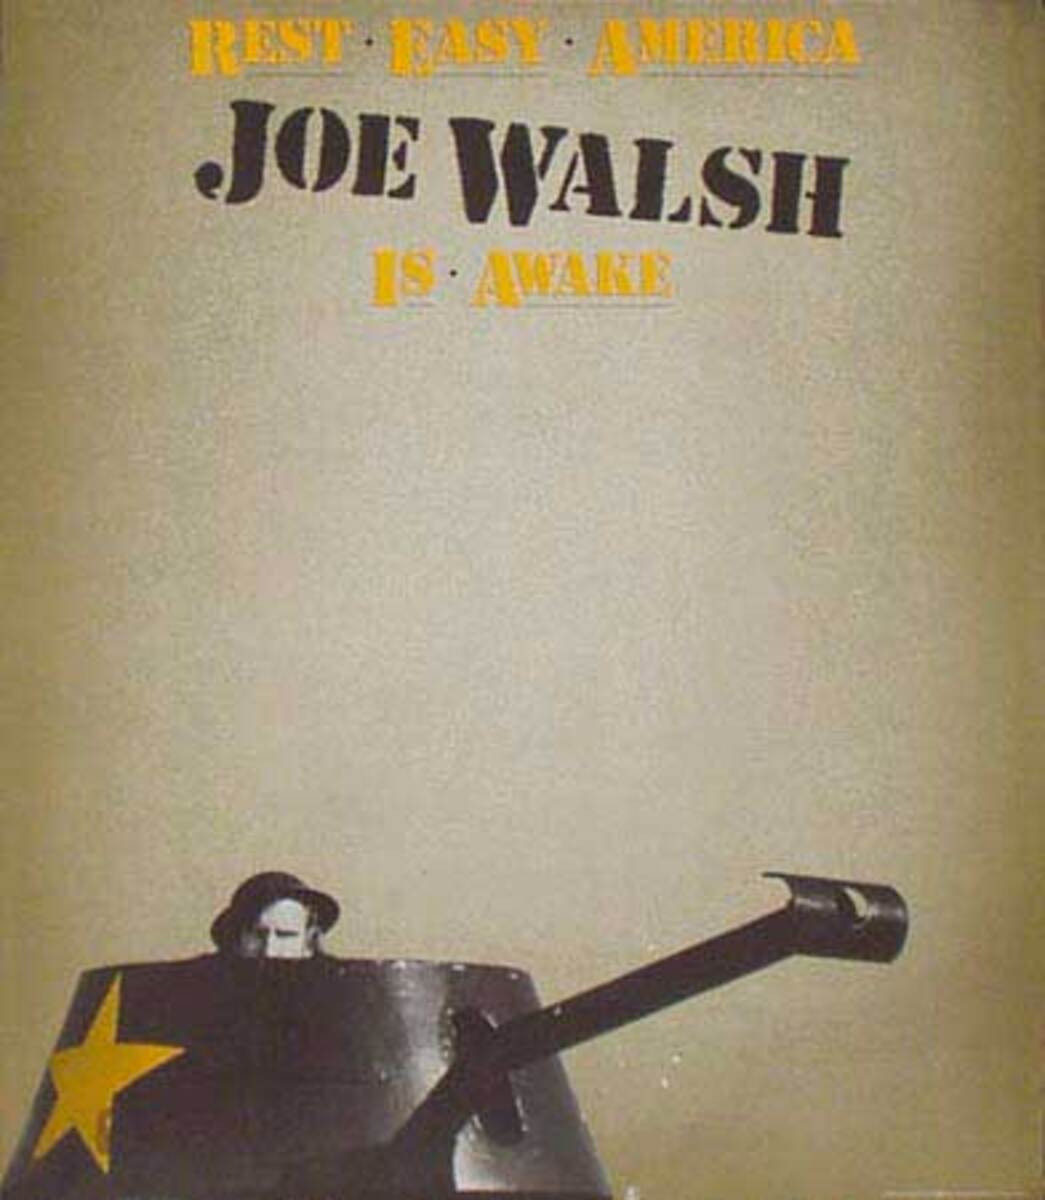 Joe Walsh Original Rock and Roll Poster Rest East America Is Awake